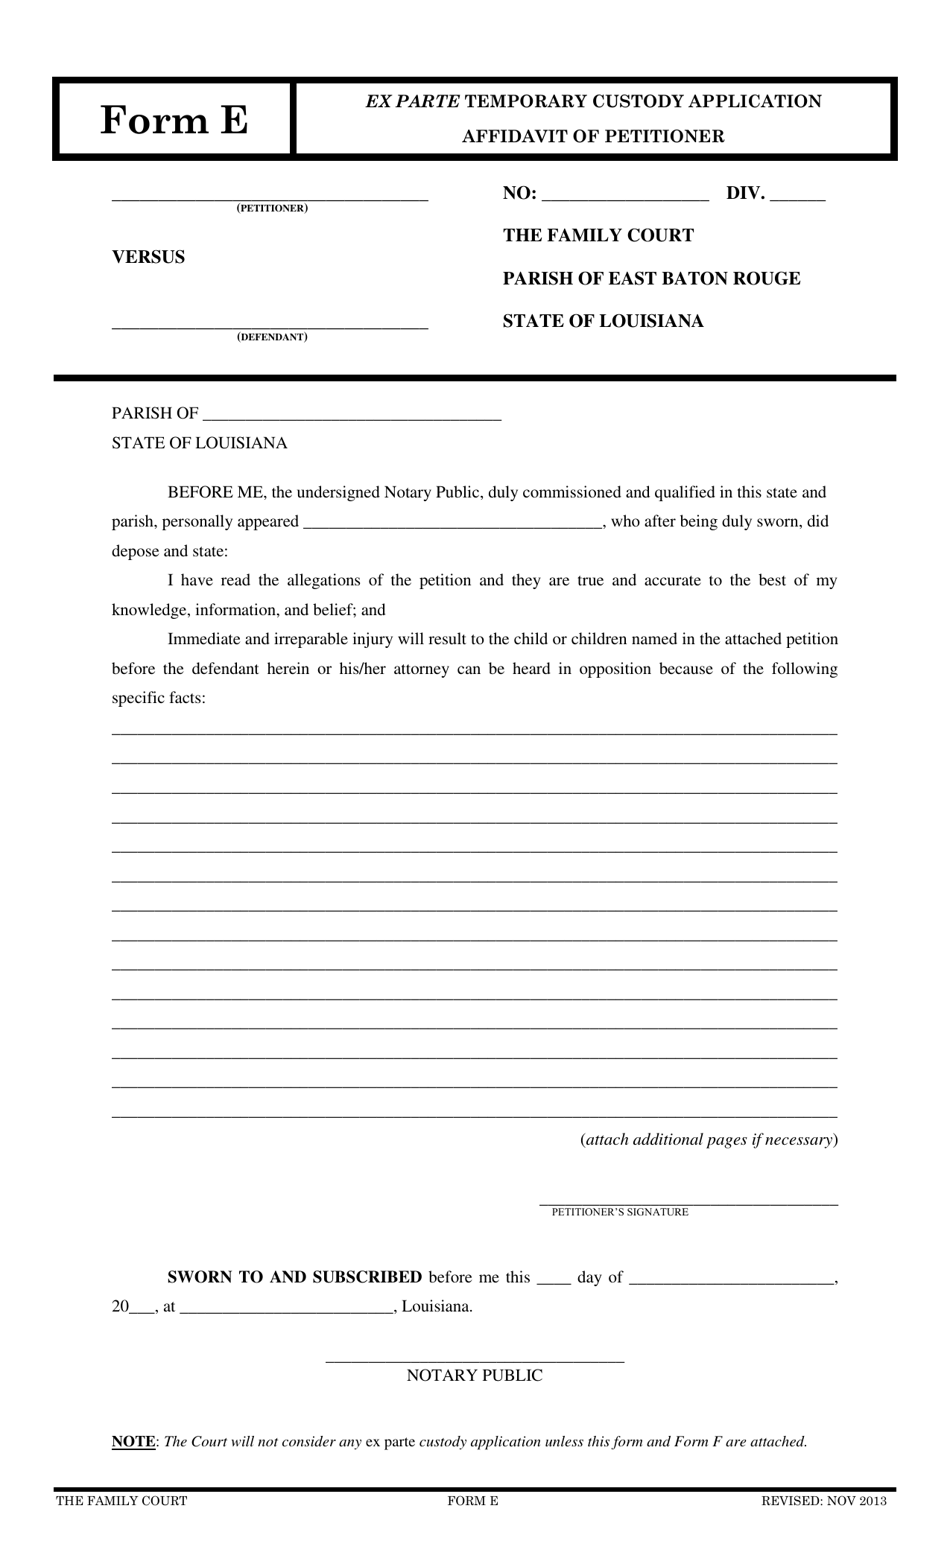 Form E Ex Parte Temporary Custody Application Affidavit of Petitioner - East Baton Rouge Parish, Louisiana, Page 1